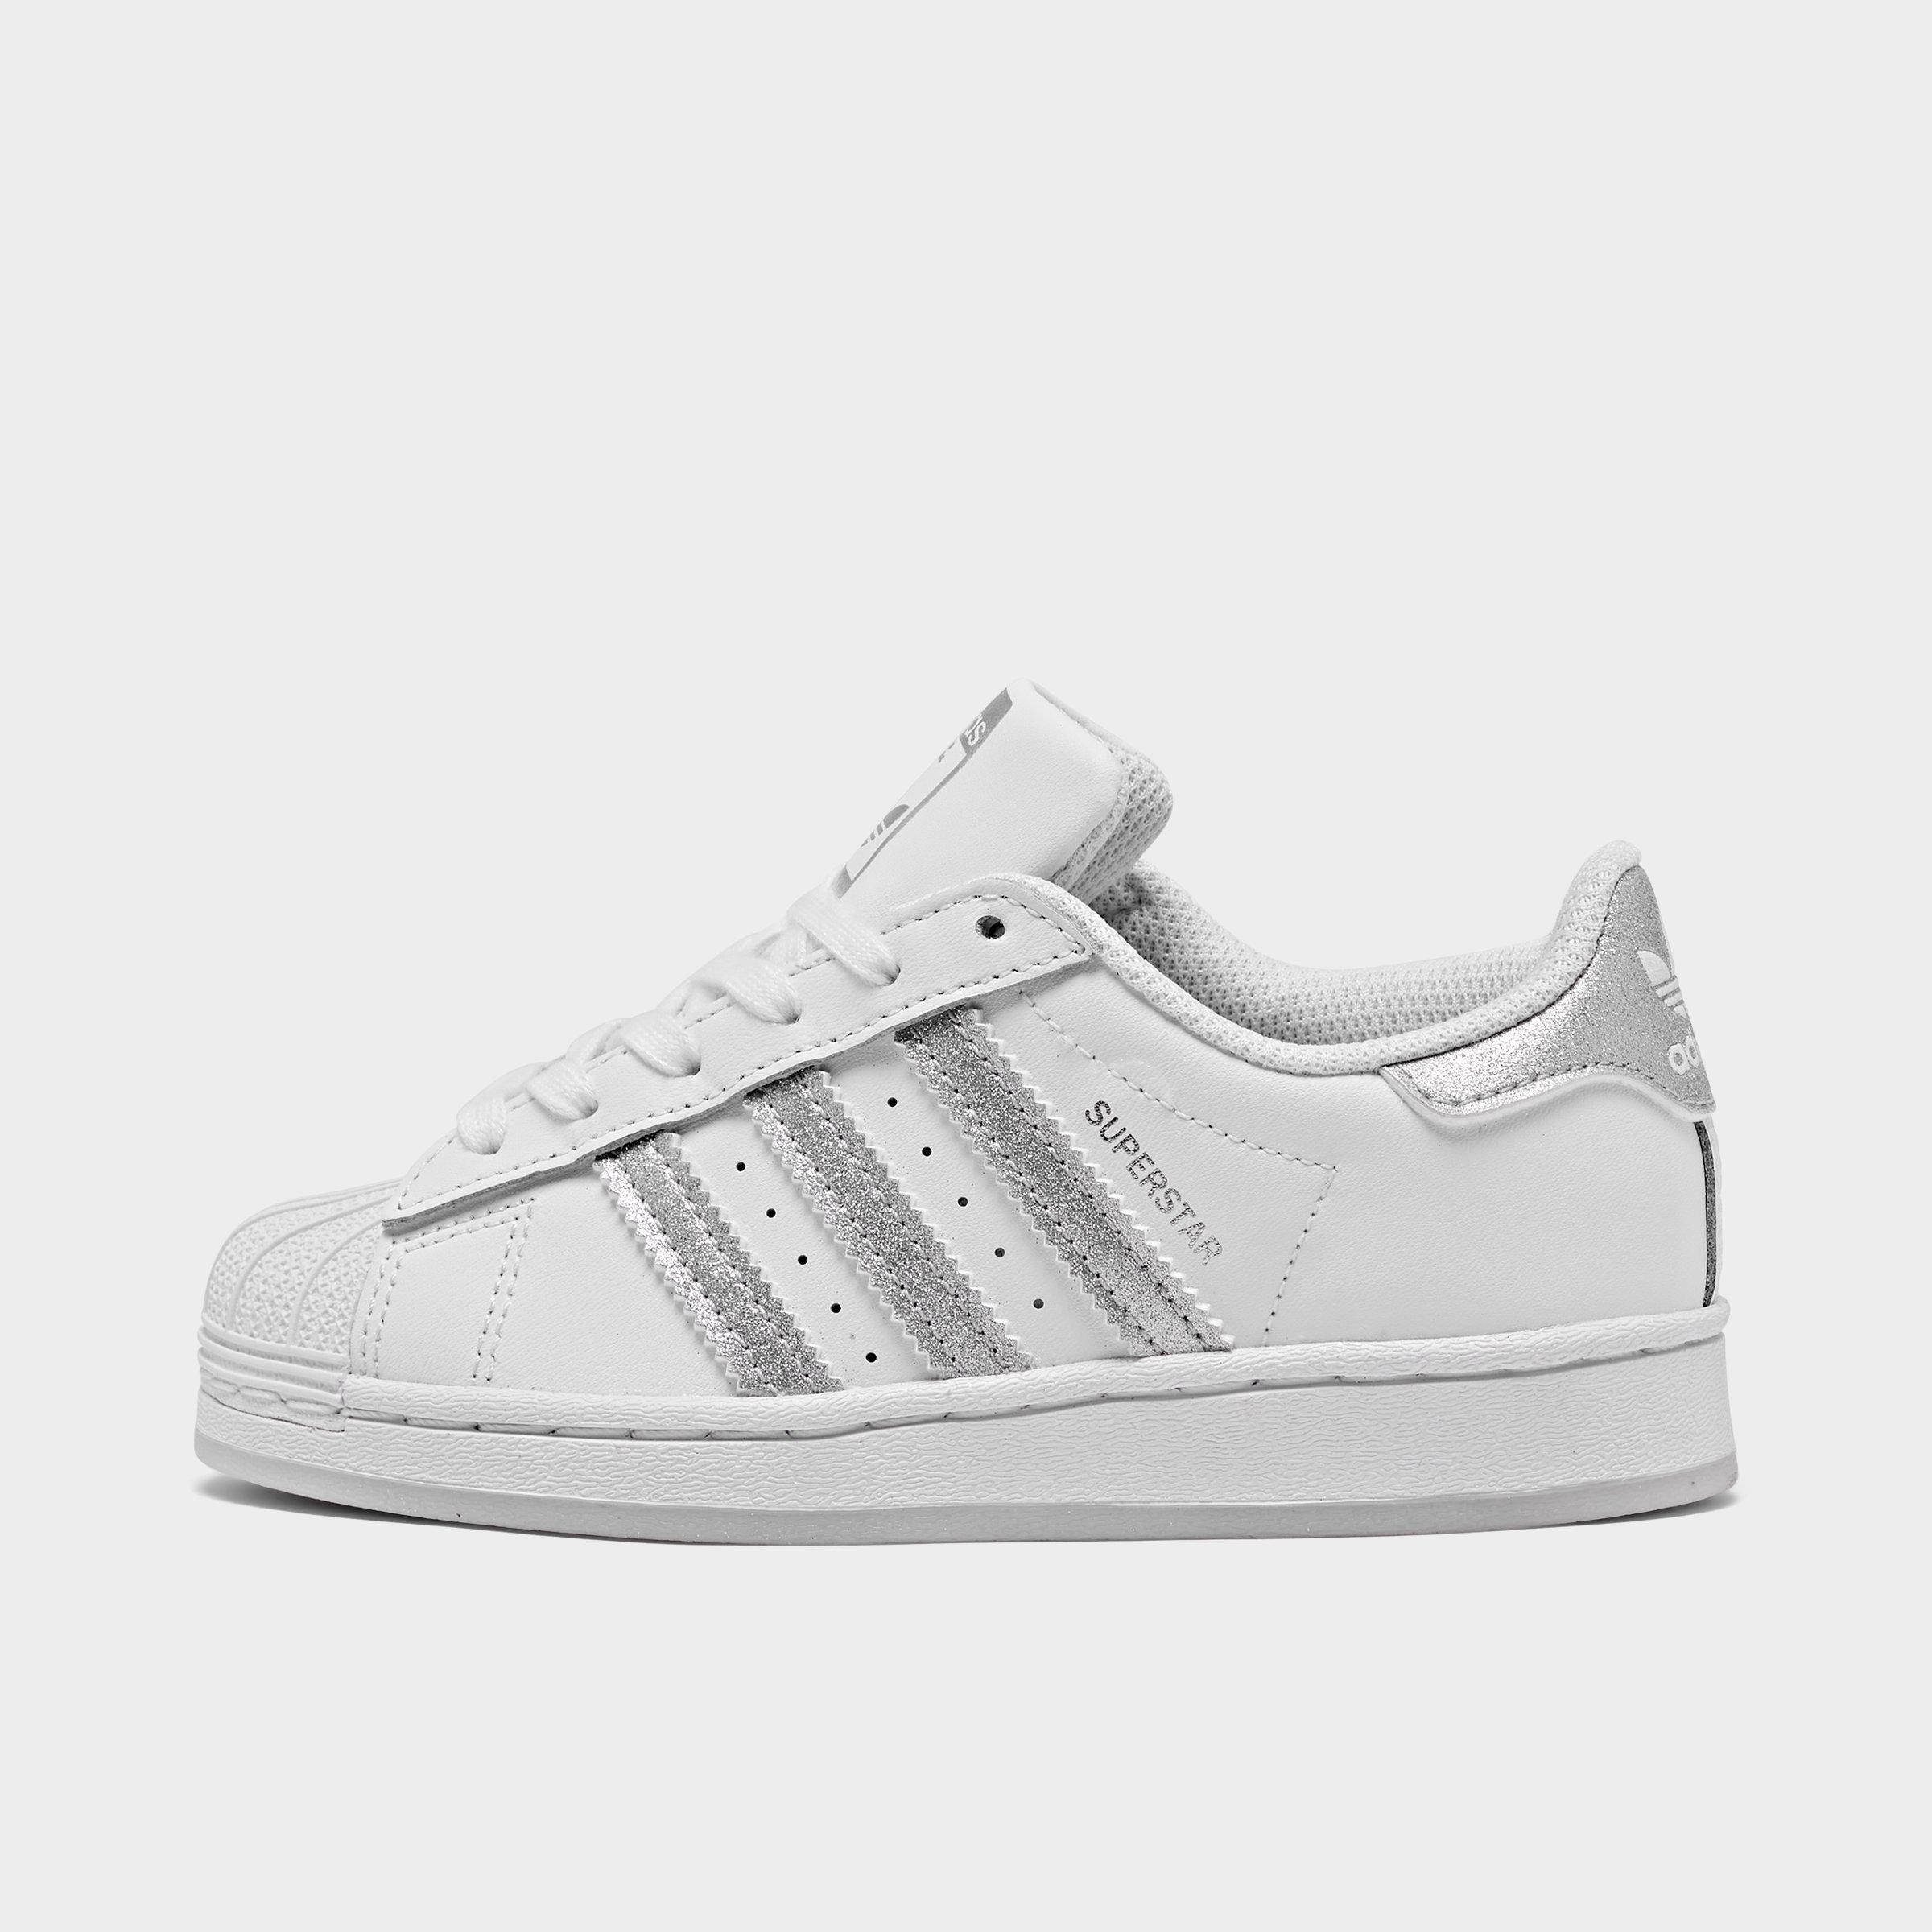 adidas superstar white & metallic silver girls shoes